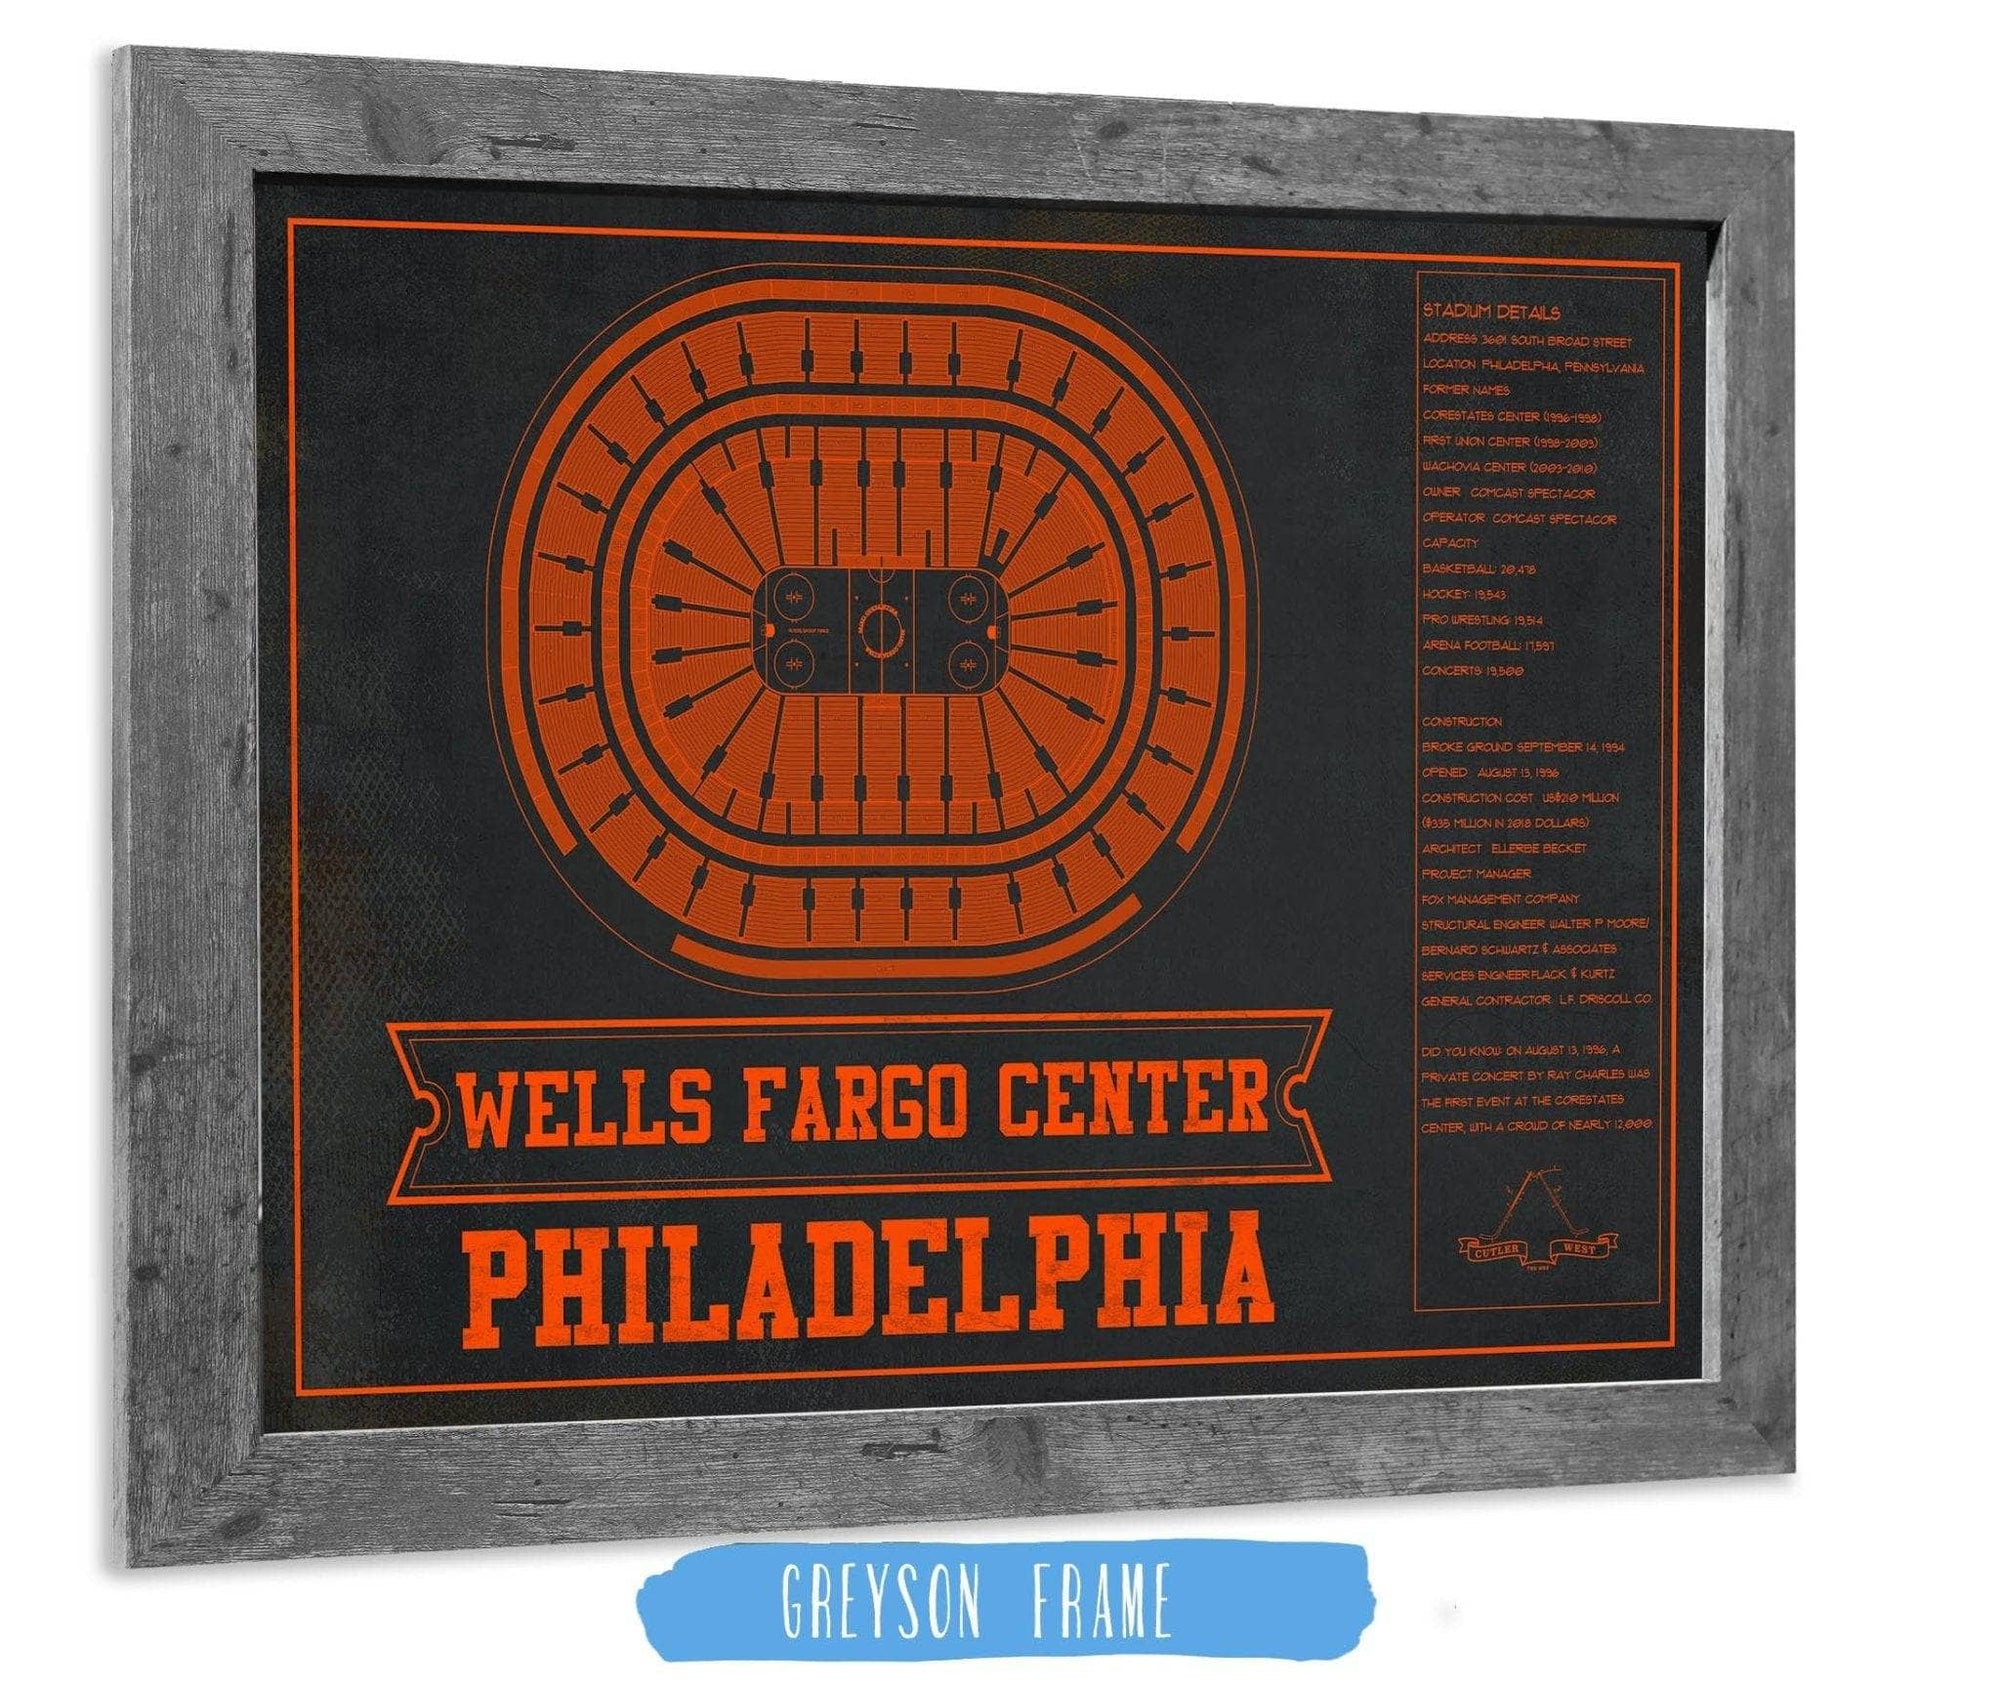 Cutler West 14" x 11" / Greyson Frame Philadelphia Flyers Wells Fargo Center Philadelphia Seating Chart - Vintage Hockey Team Color Print 944343983-TOP-14"-x-11"80793